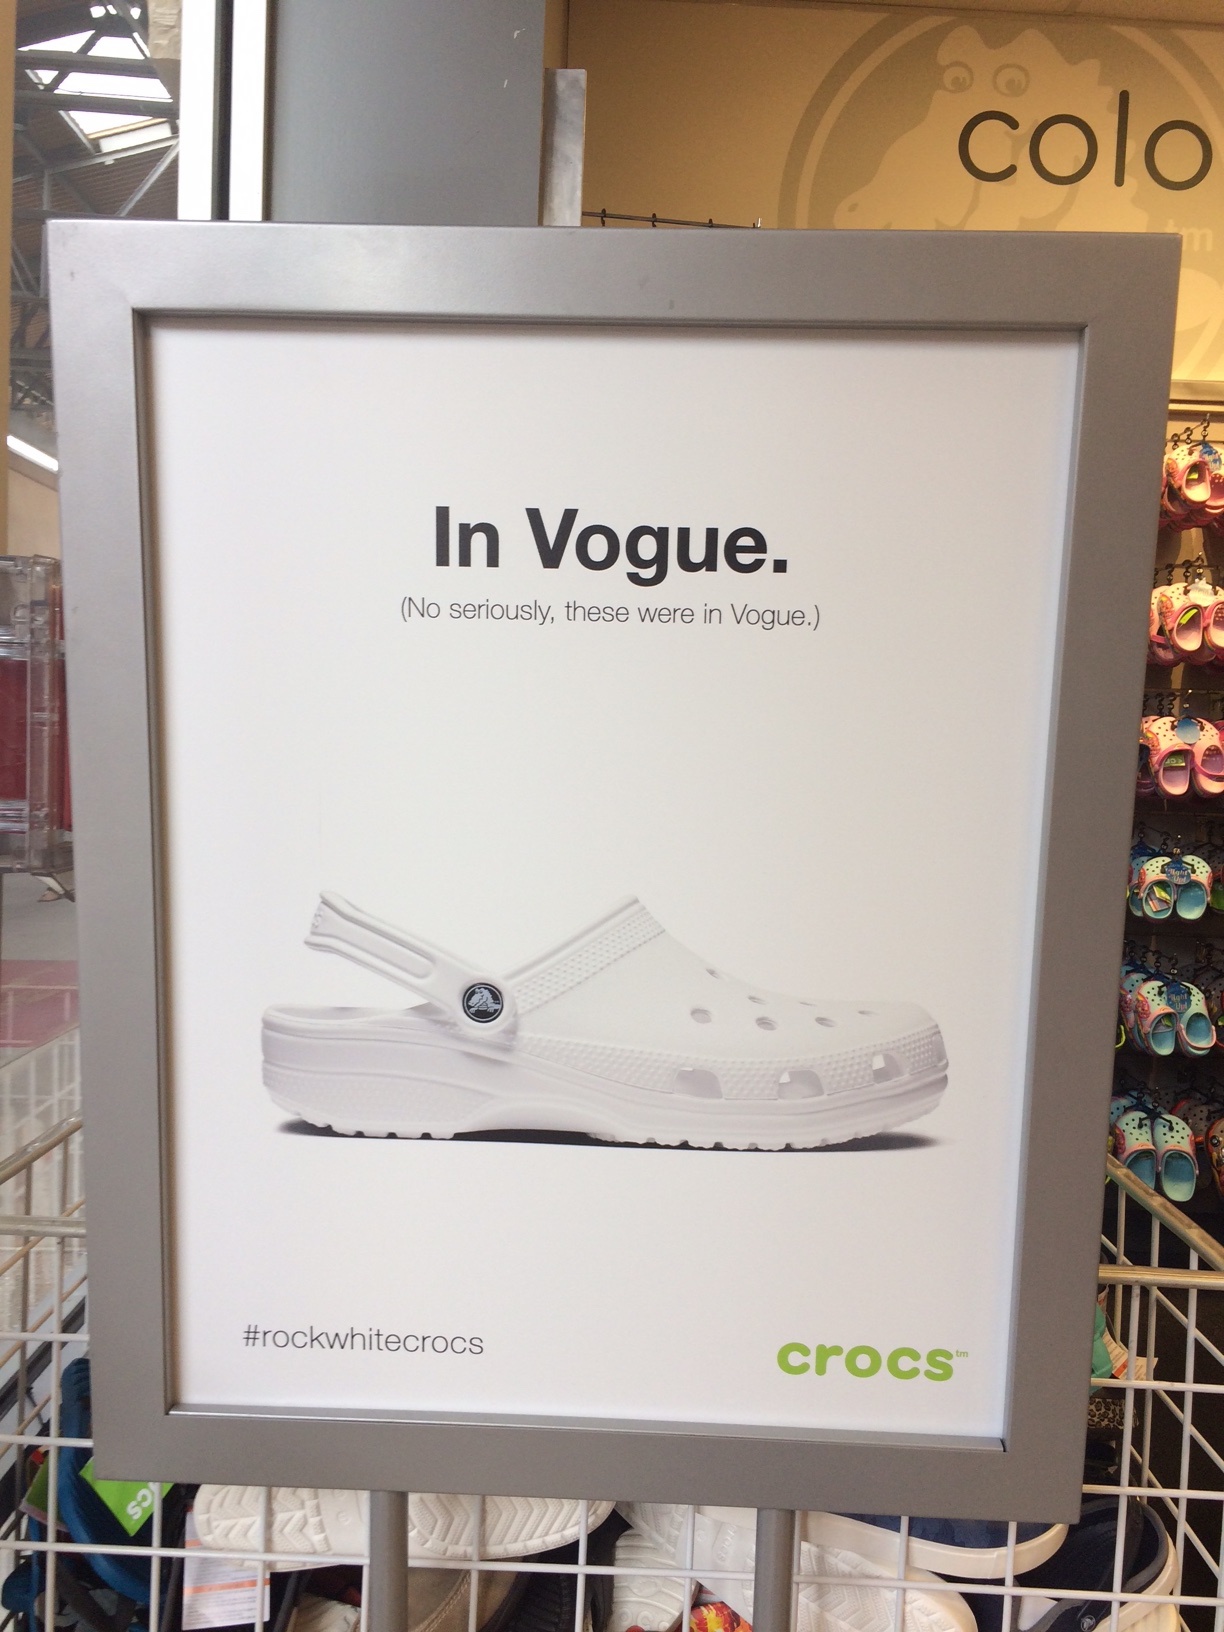 off brand crocs target